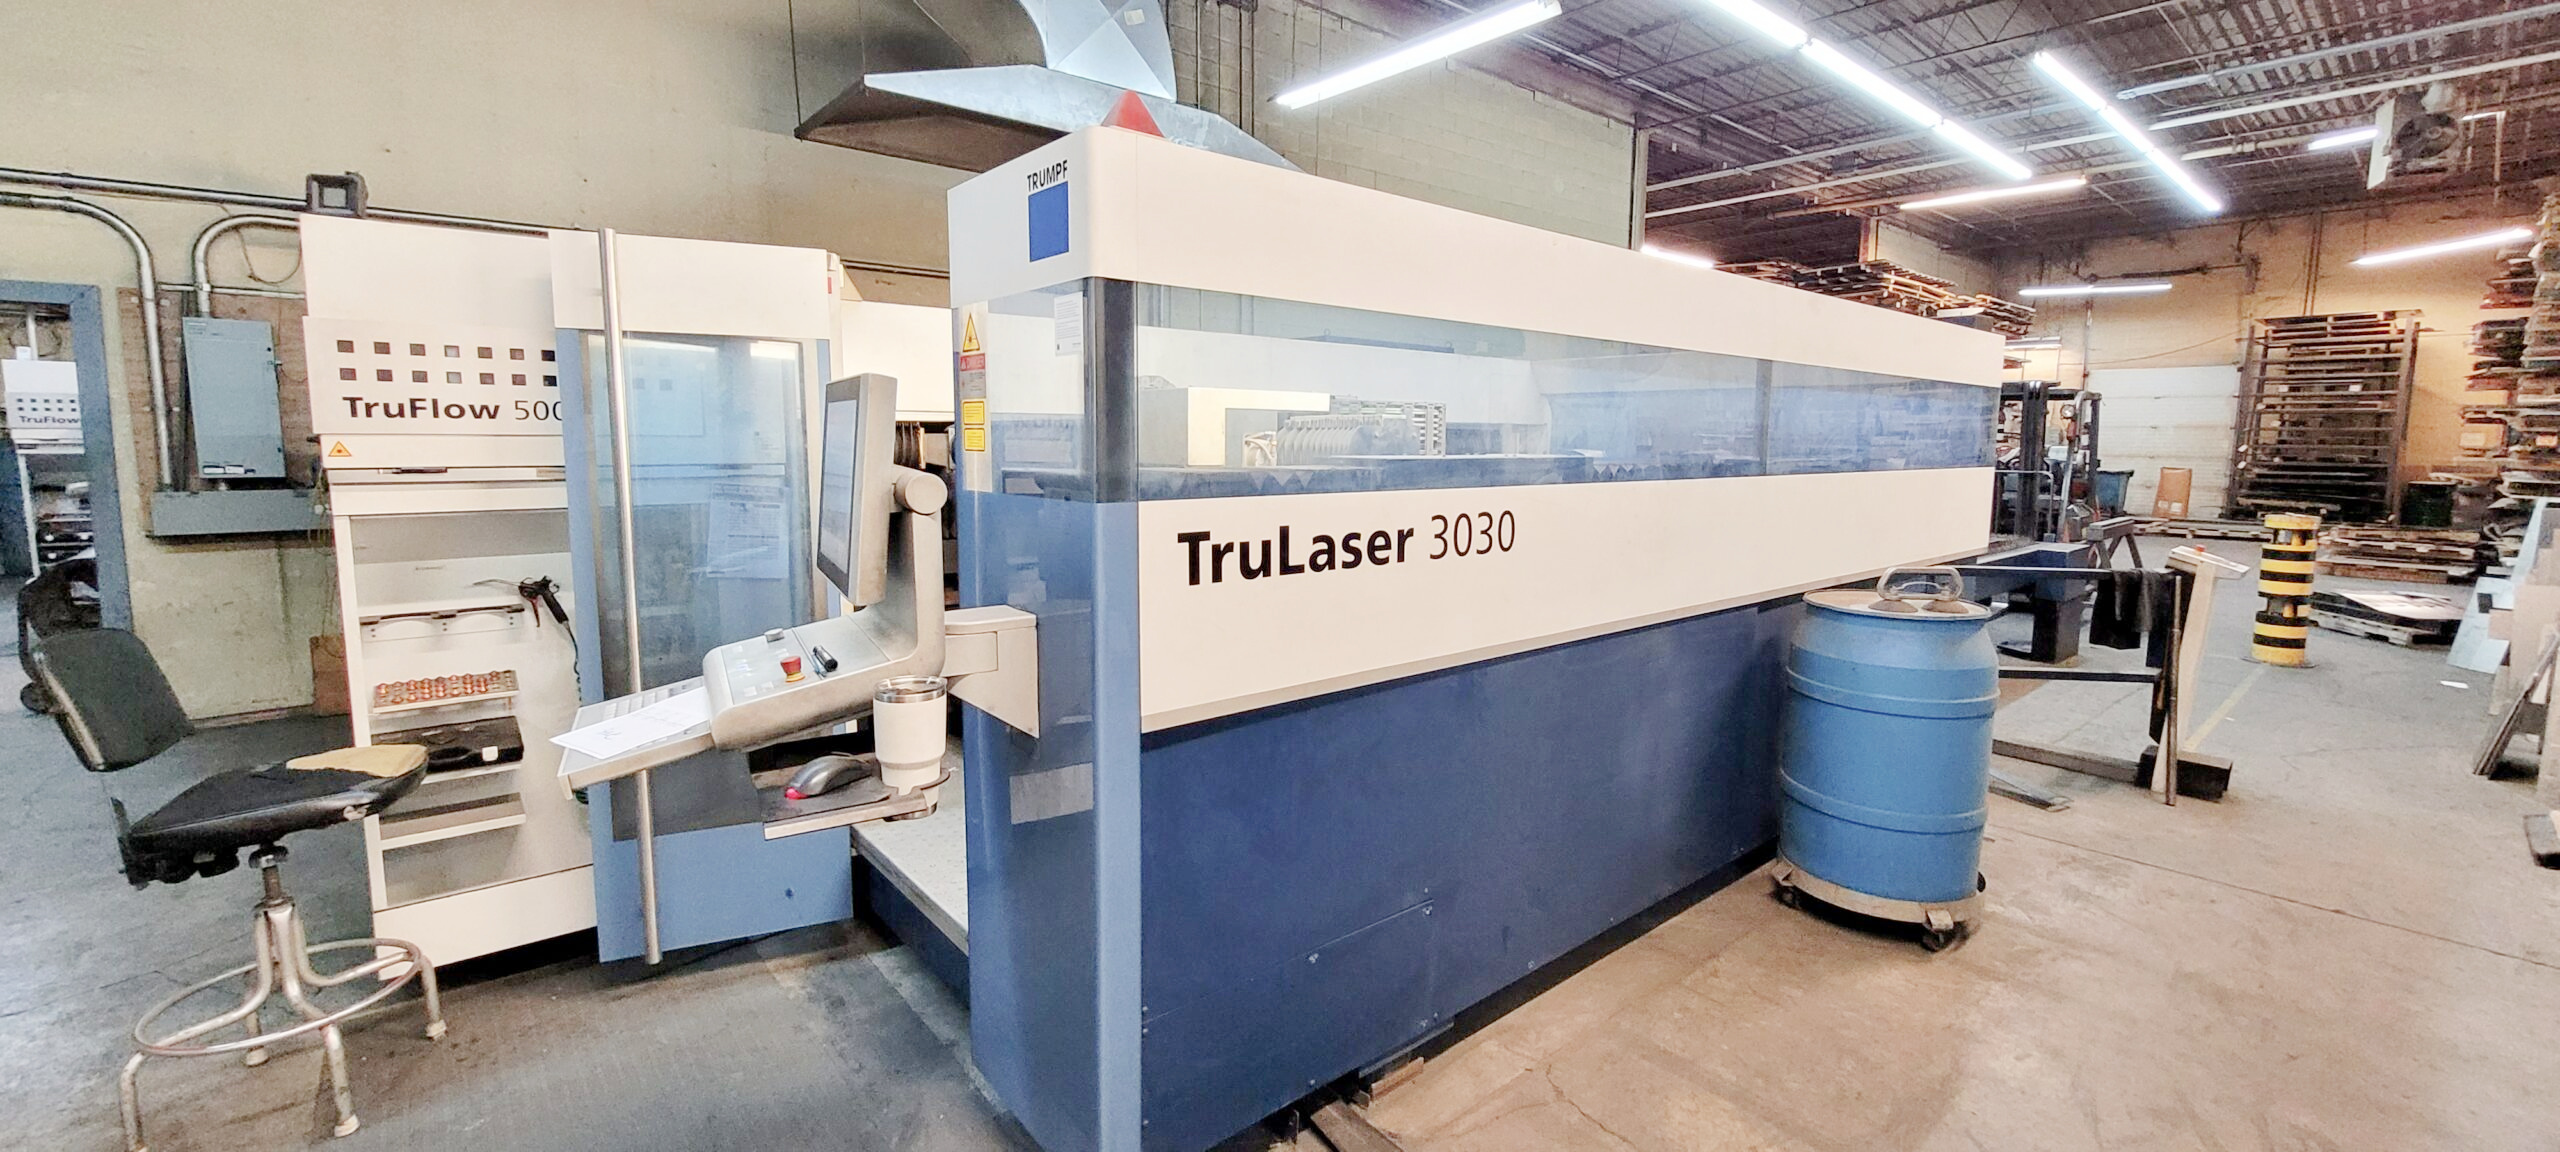 Trumpf TruLaser 3030 CNC Laser Machine (used) Item # UE-011322J (Arizona)